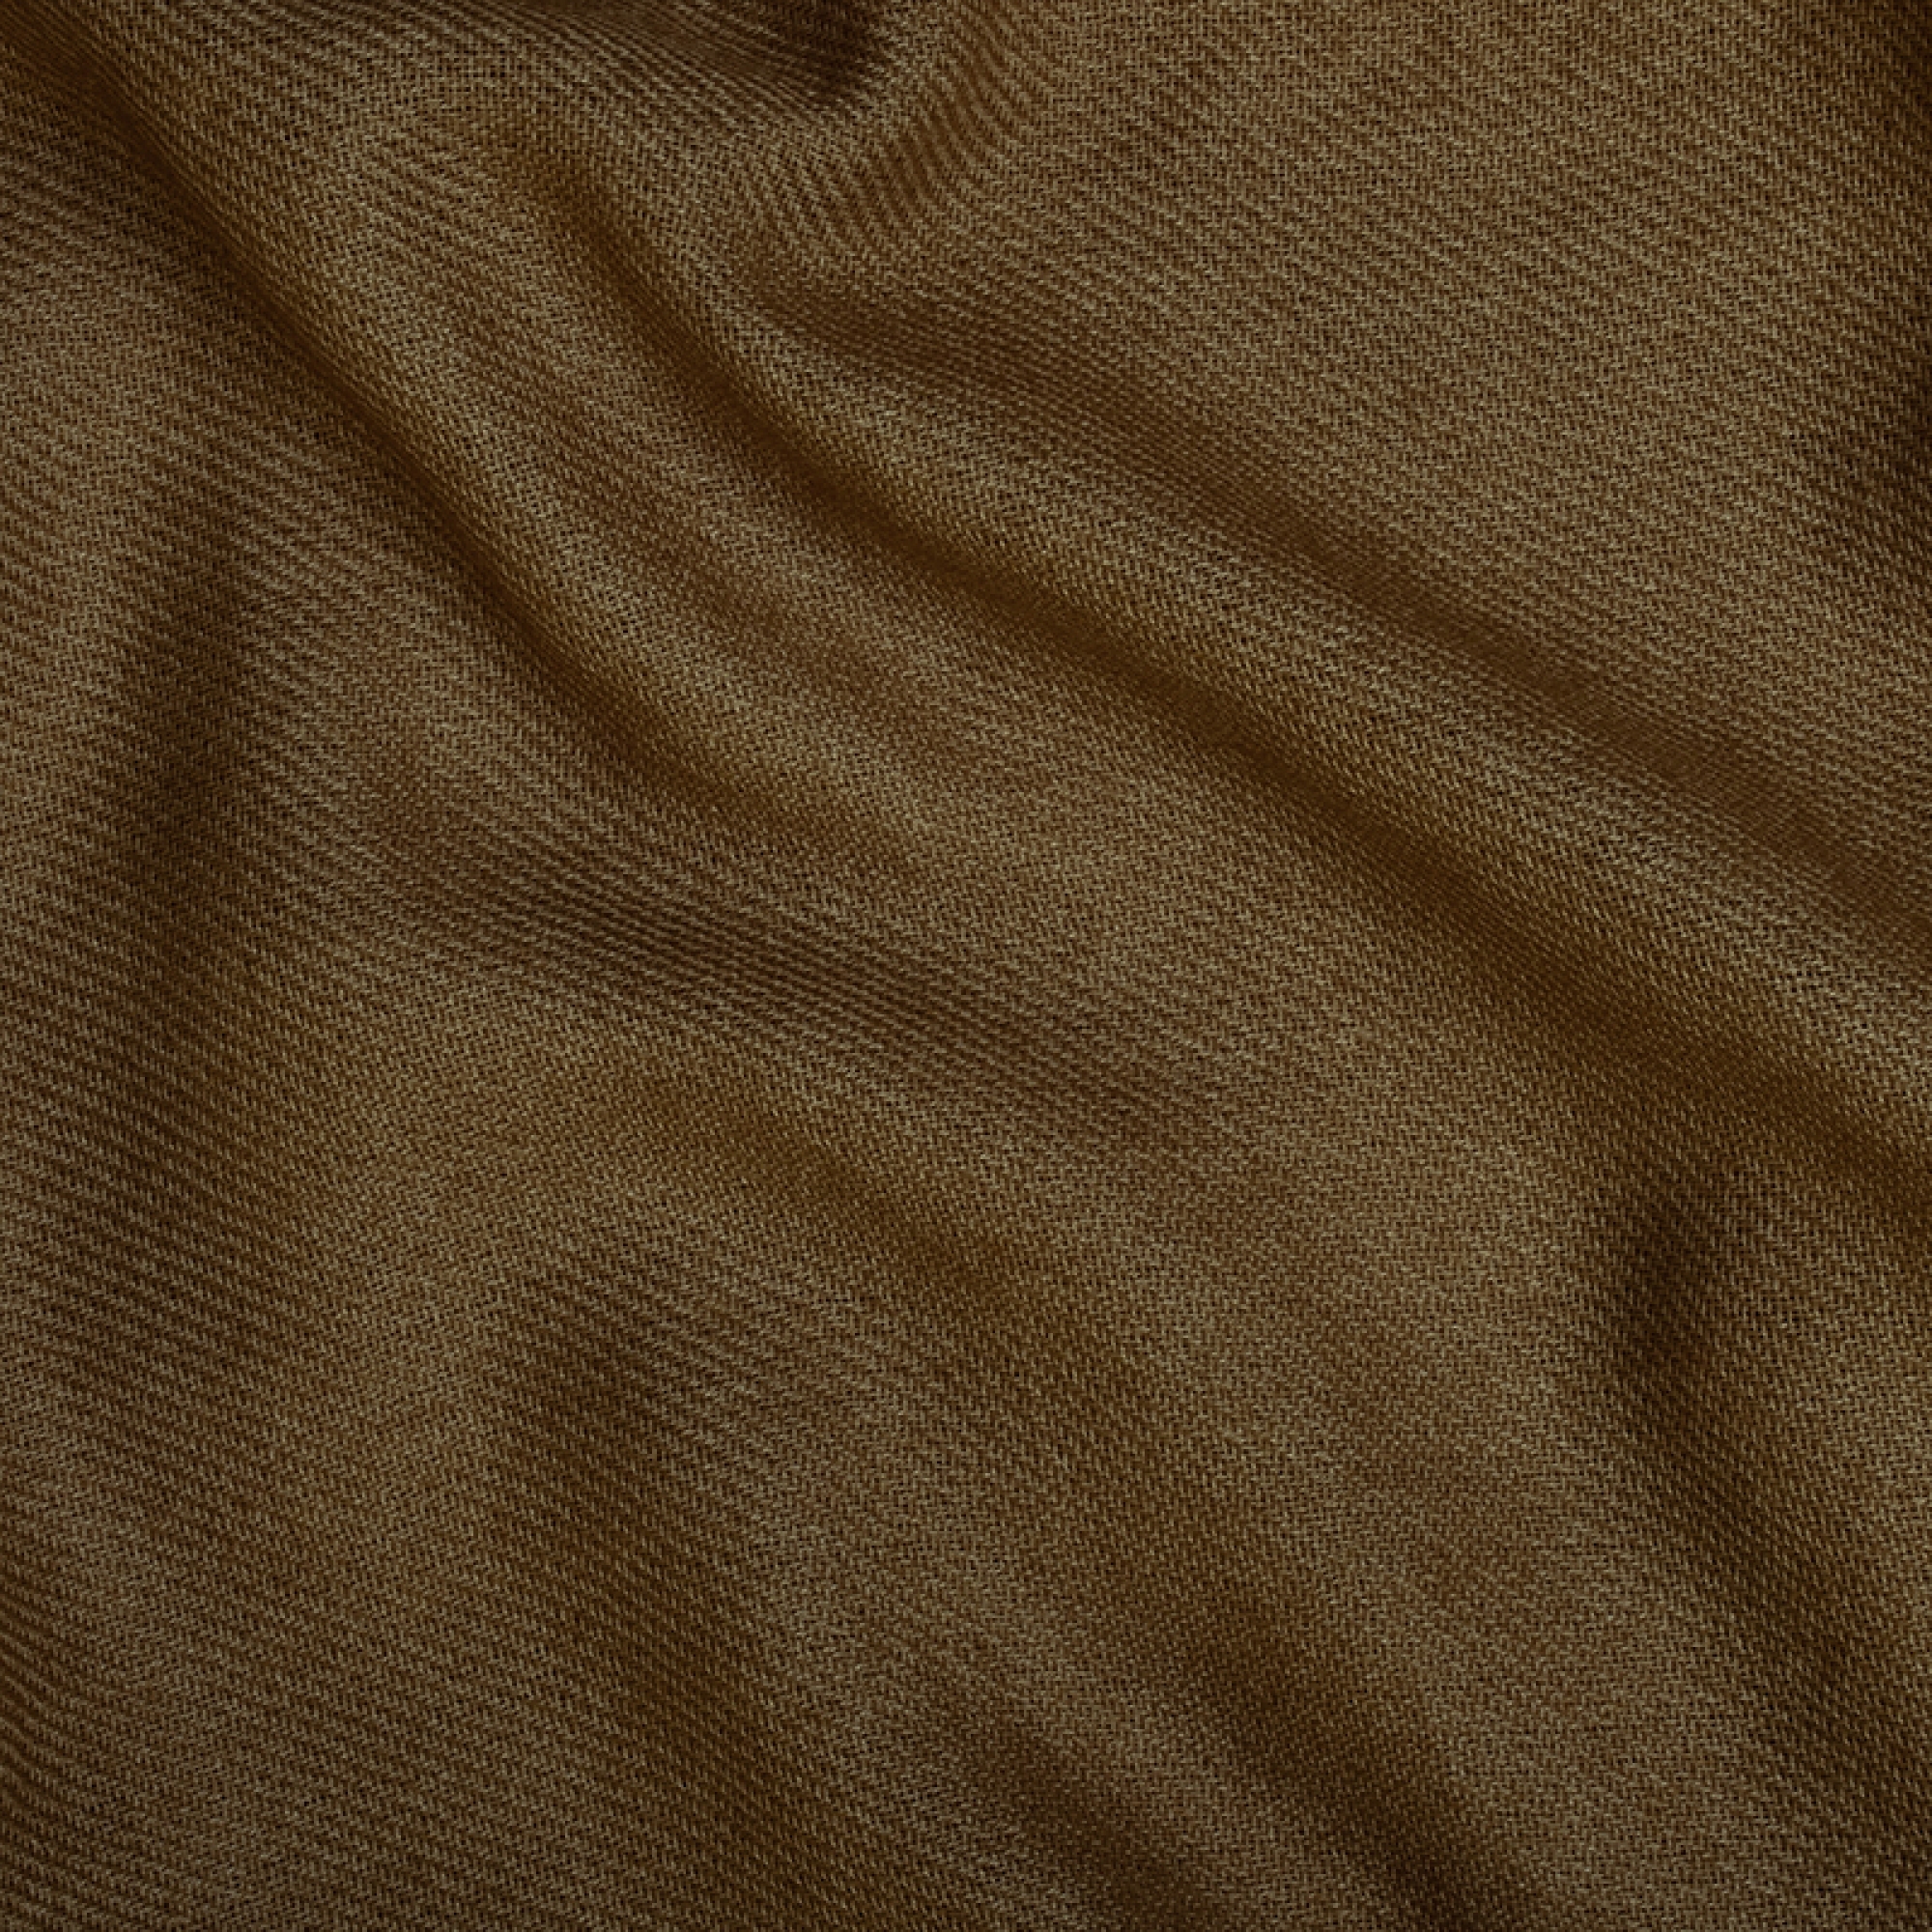 Cashmere accessories blanket toodoo plain m 180 x 220 bronze 180 x 220 cm